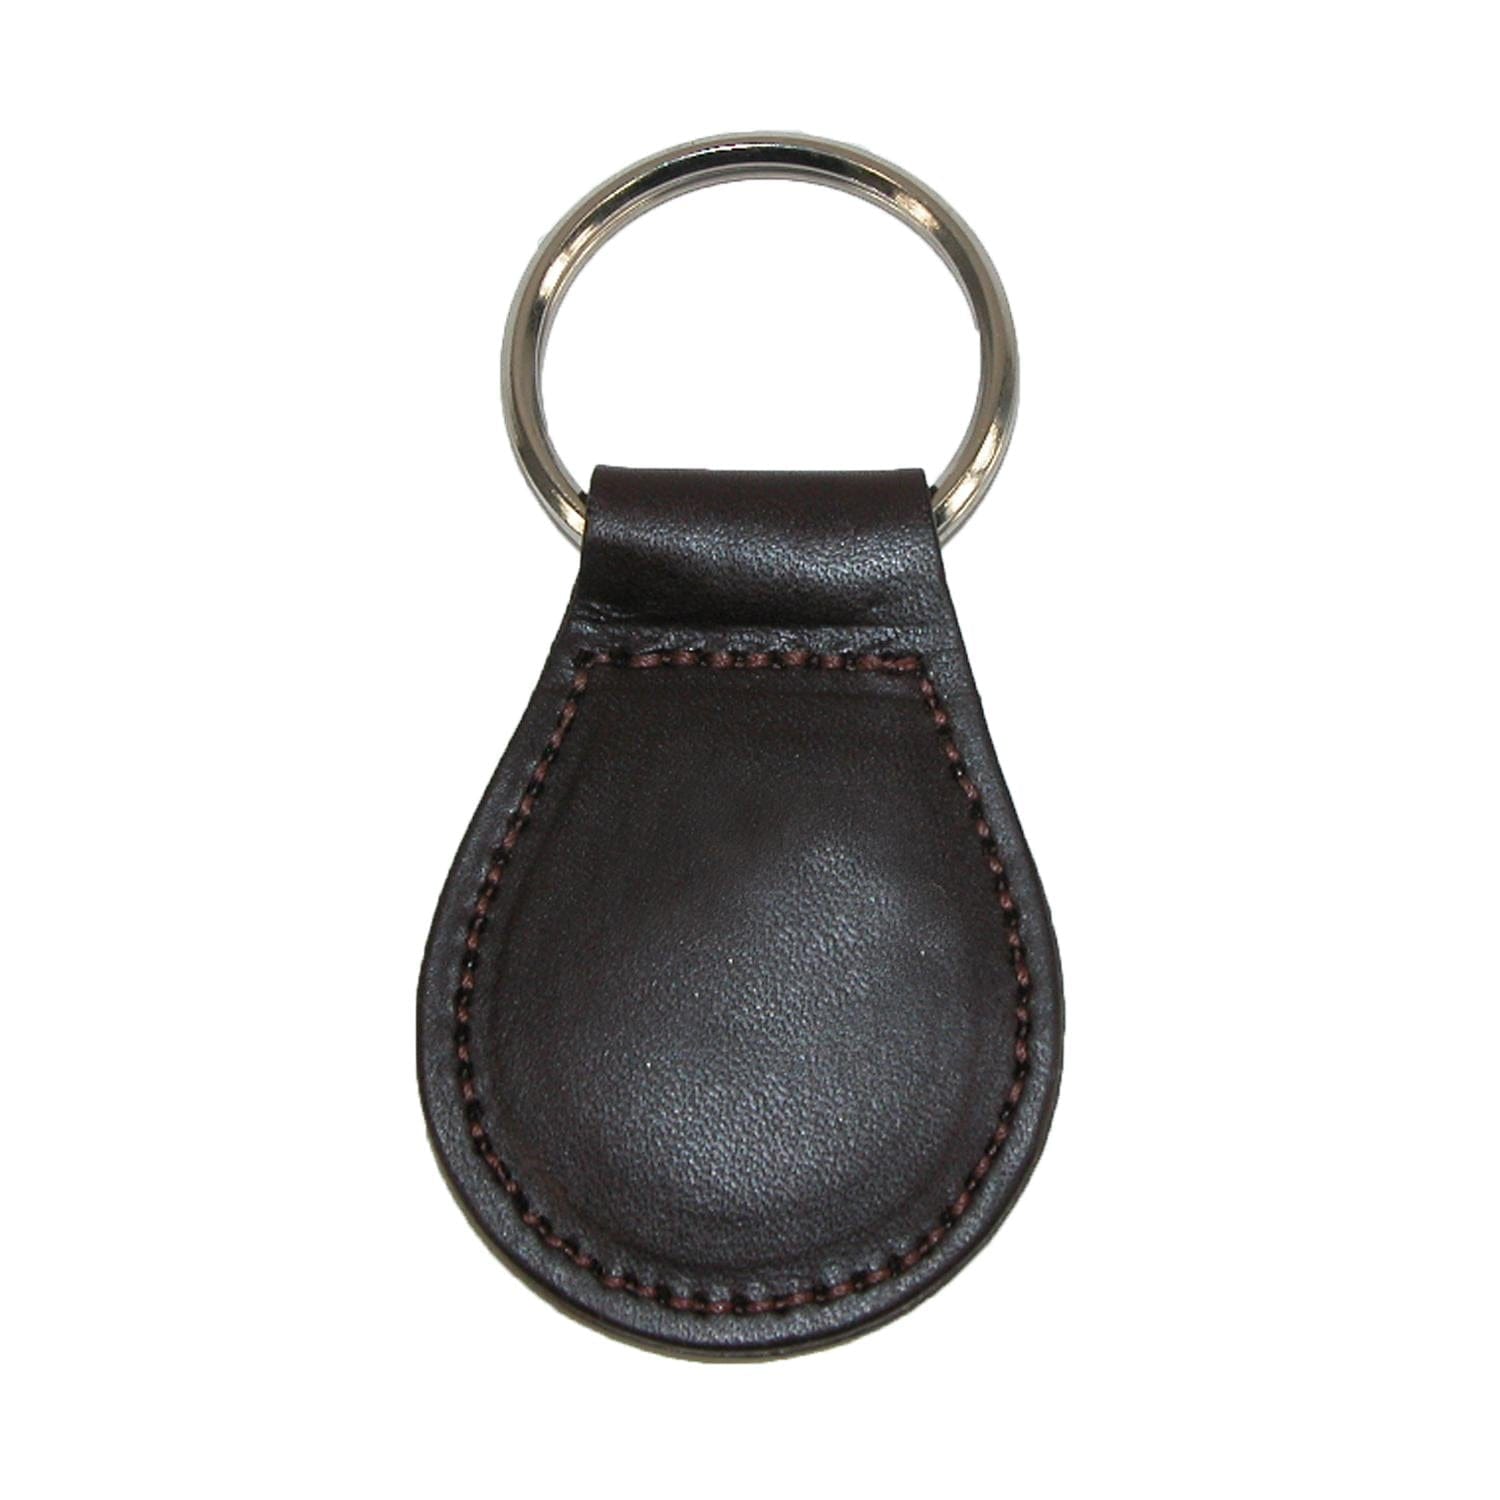 Smooth Leather Tear Drop Key Fob Keychain by Boston Leather